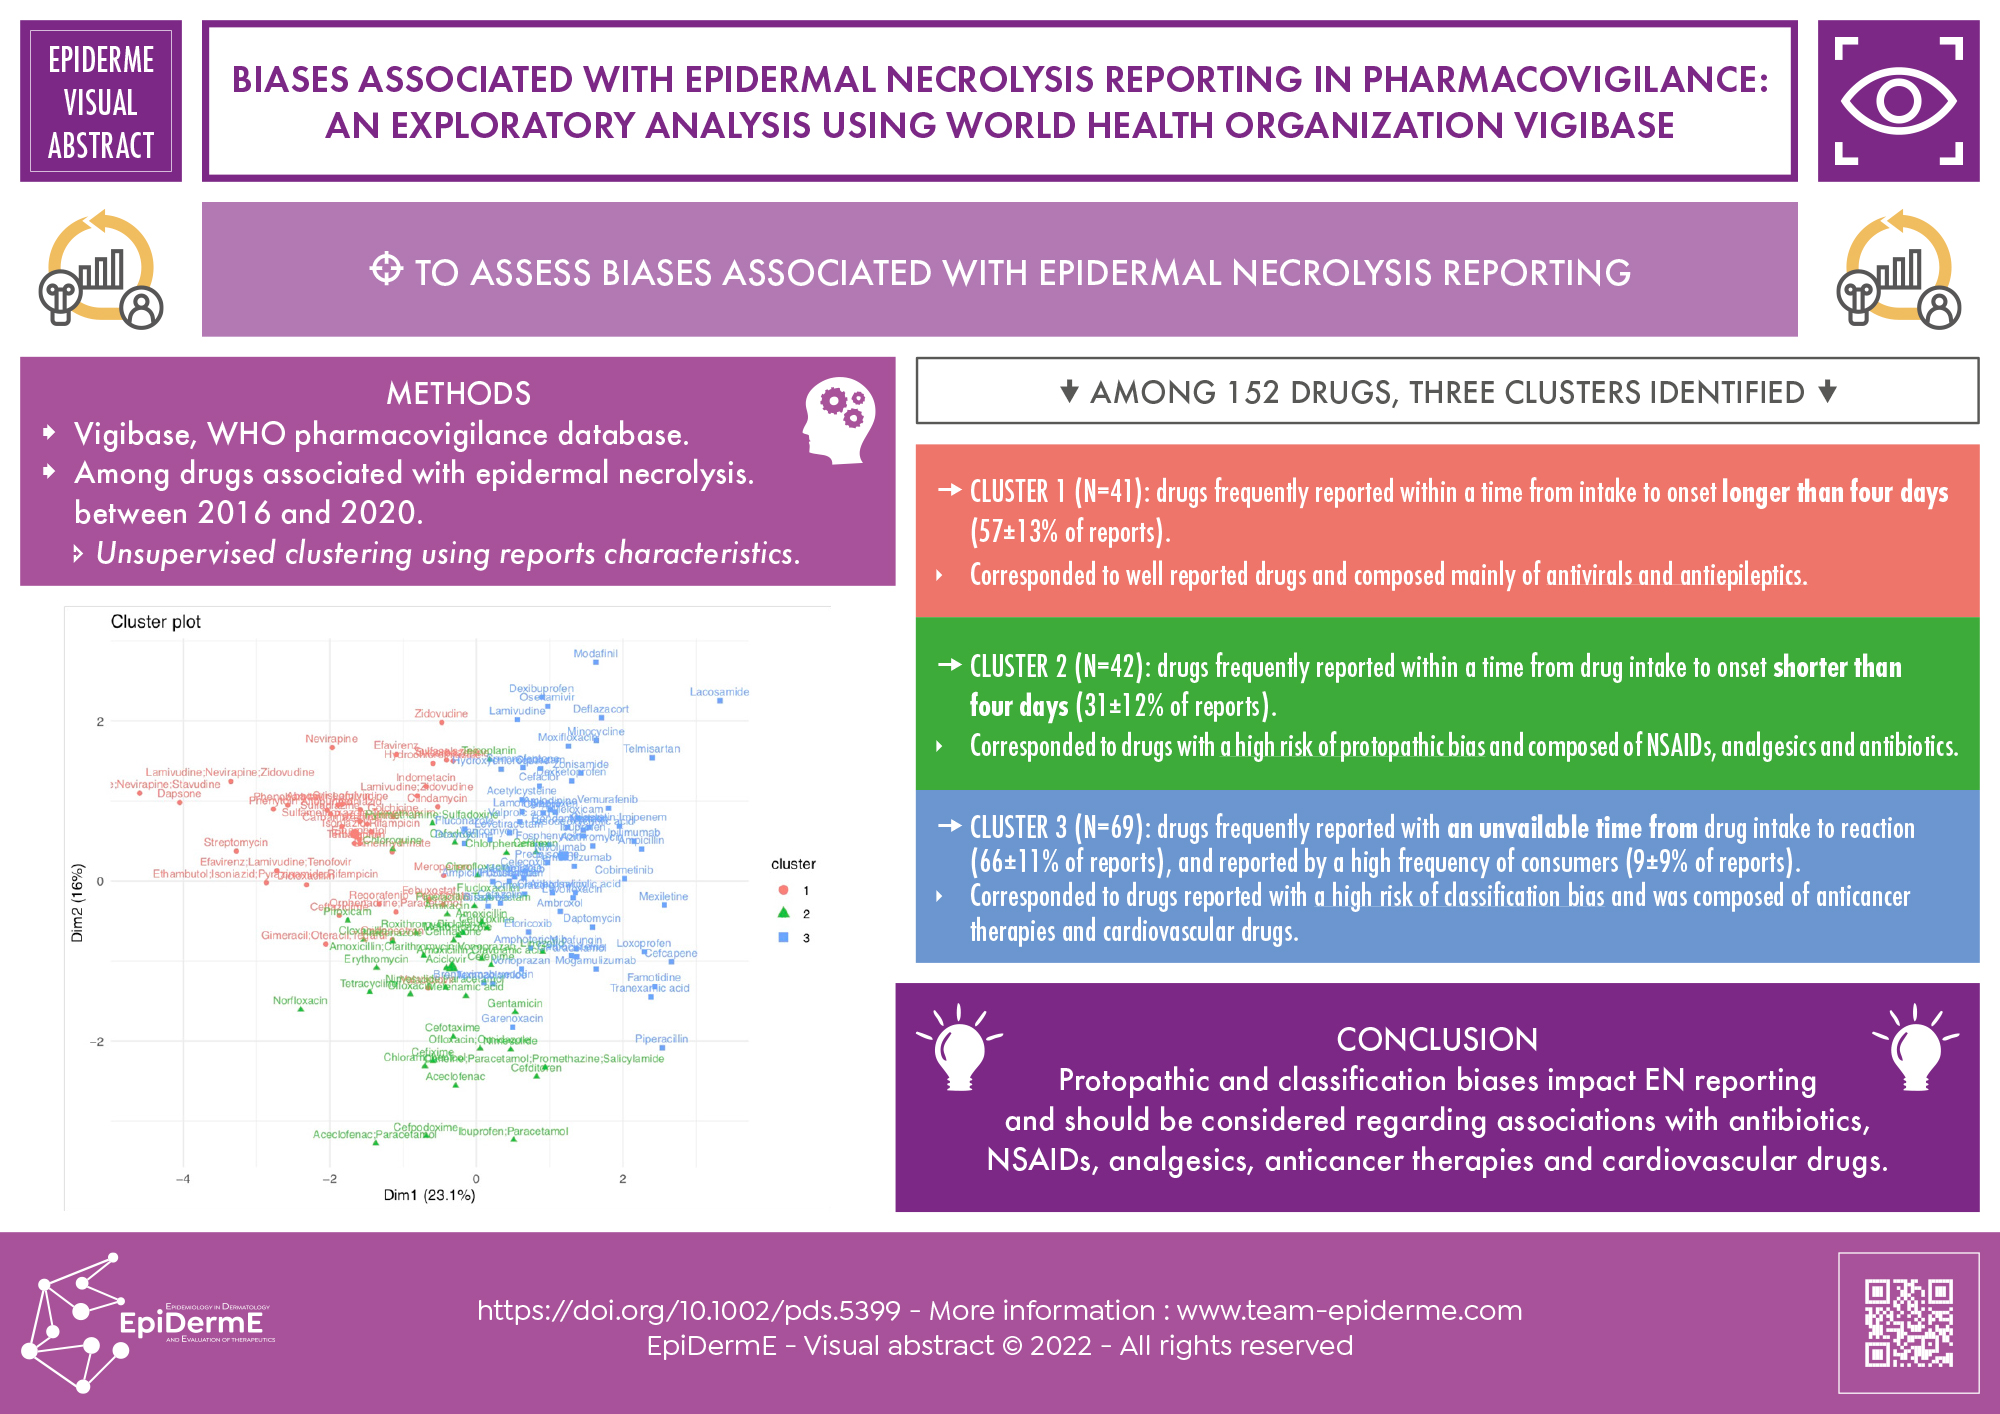 Biases associated with epidermal necrolysis reporting in pharmacovigilance: An exploratory analysis using World Health Organization VigiBase